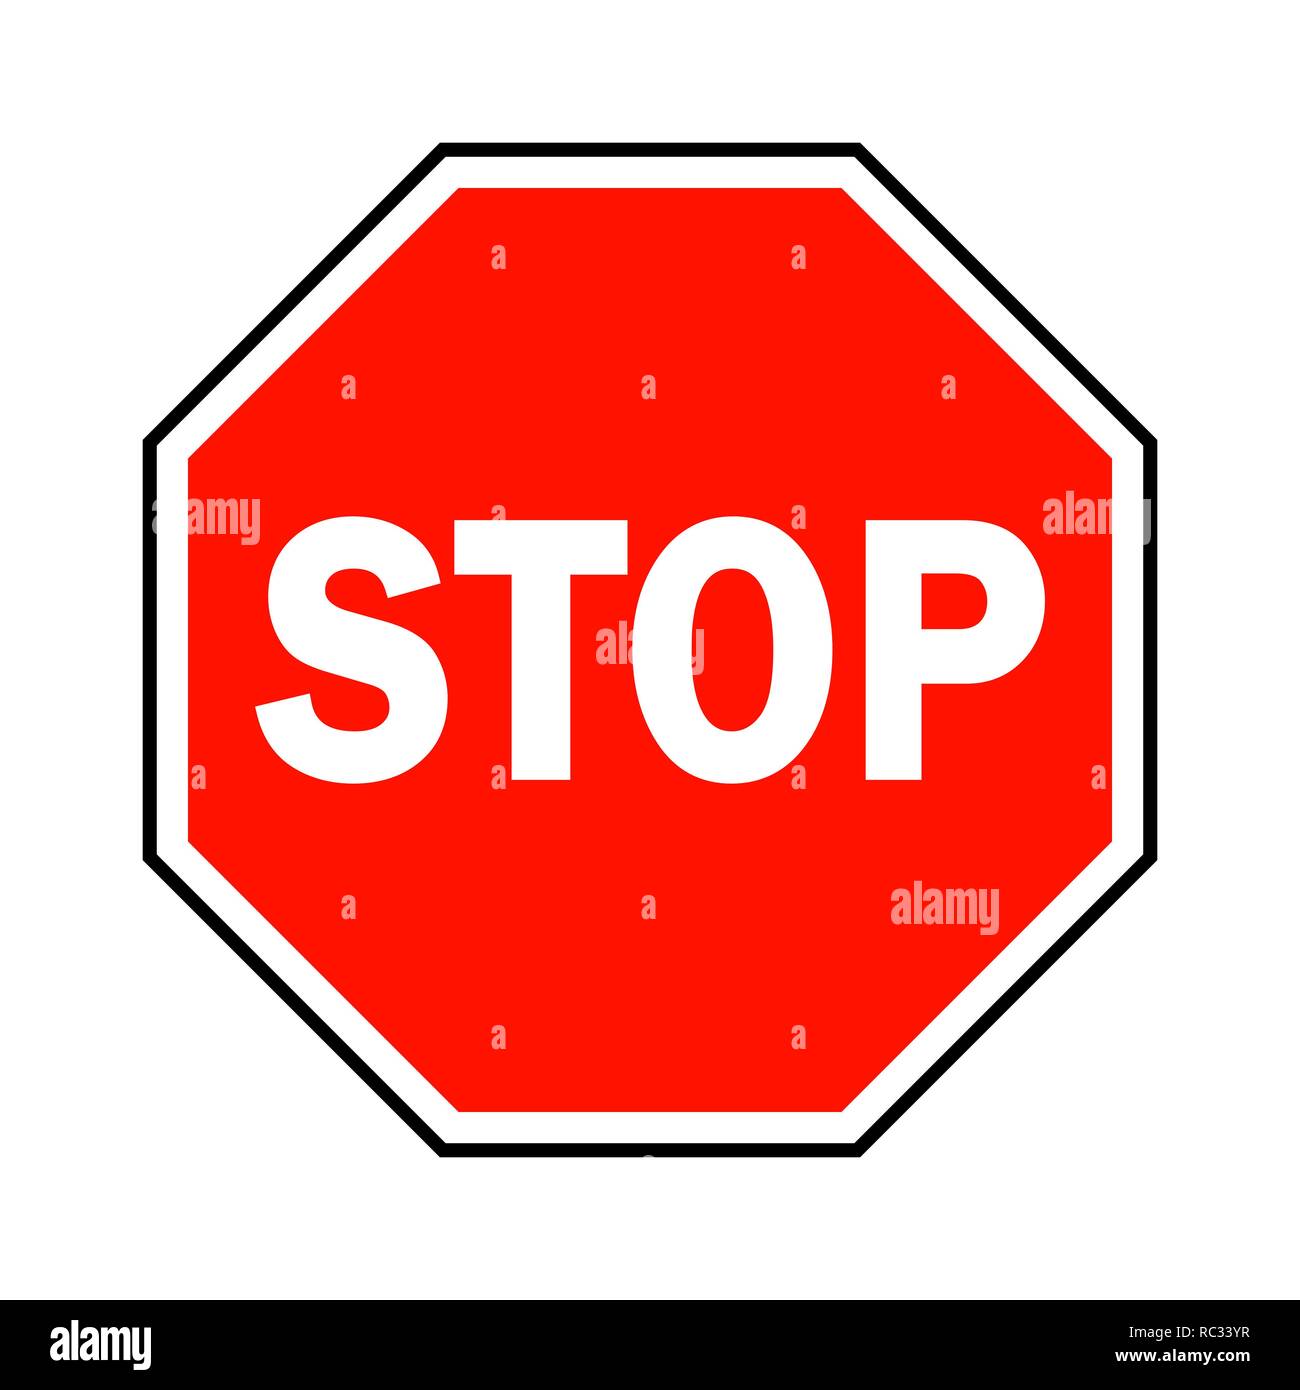 STOP-Schild. Vector Illustration. Rote Ampel stoppen Stock Vektor